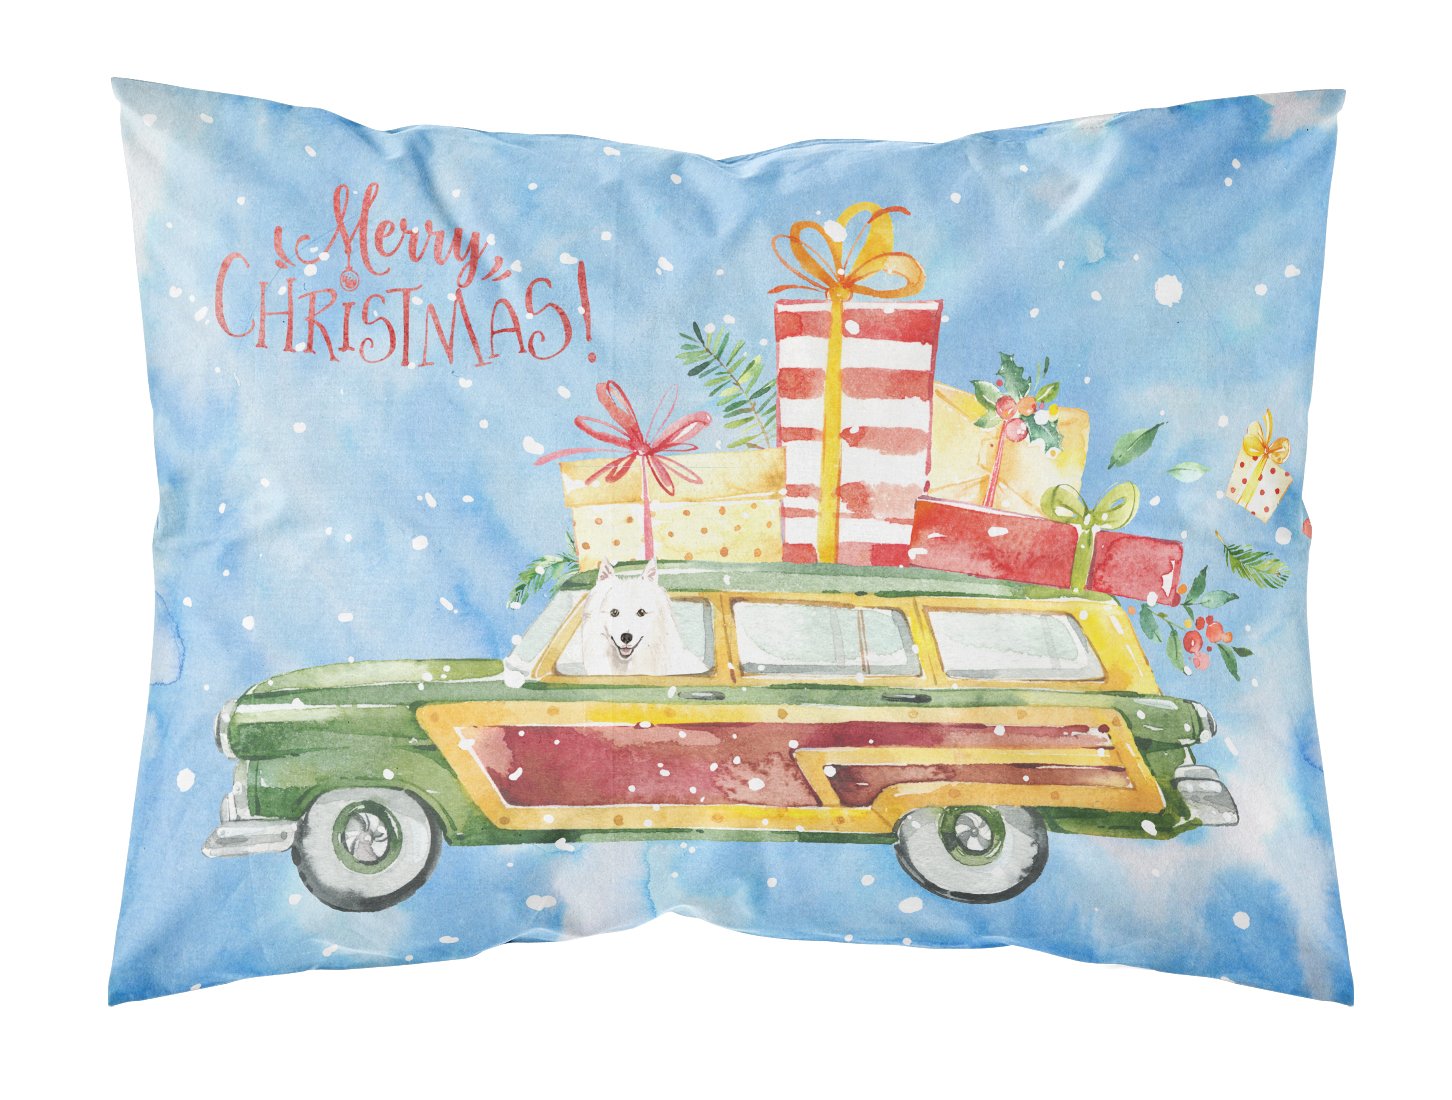 Merry Christmas Japanese Spitz Fabric Standard Pillowcase CK2410PILLOWCASE by Caroline's Treasures